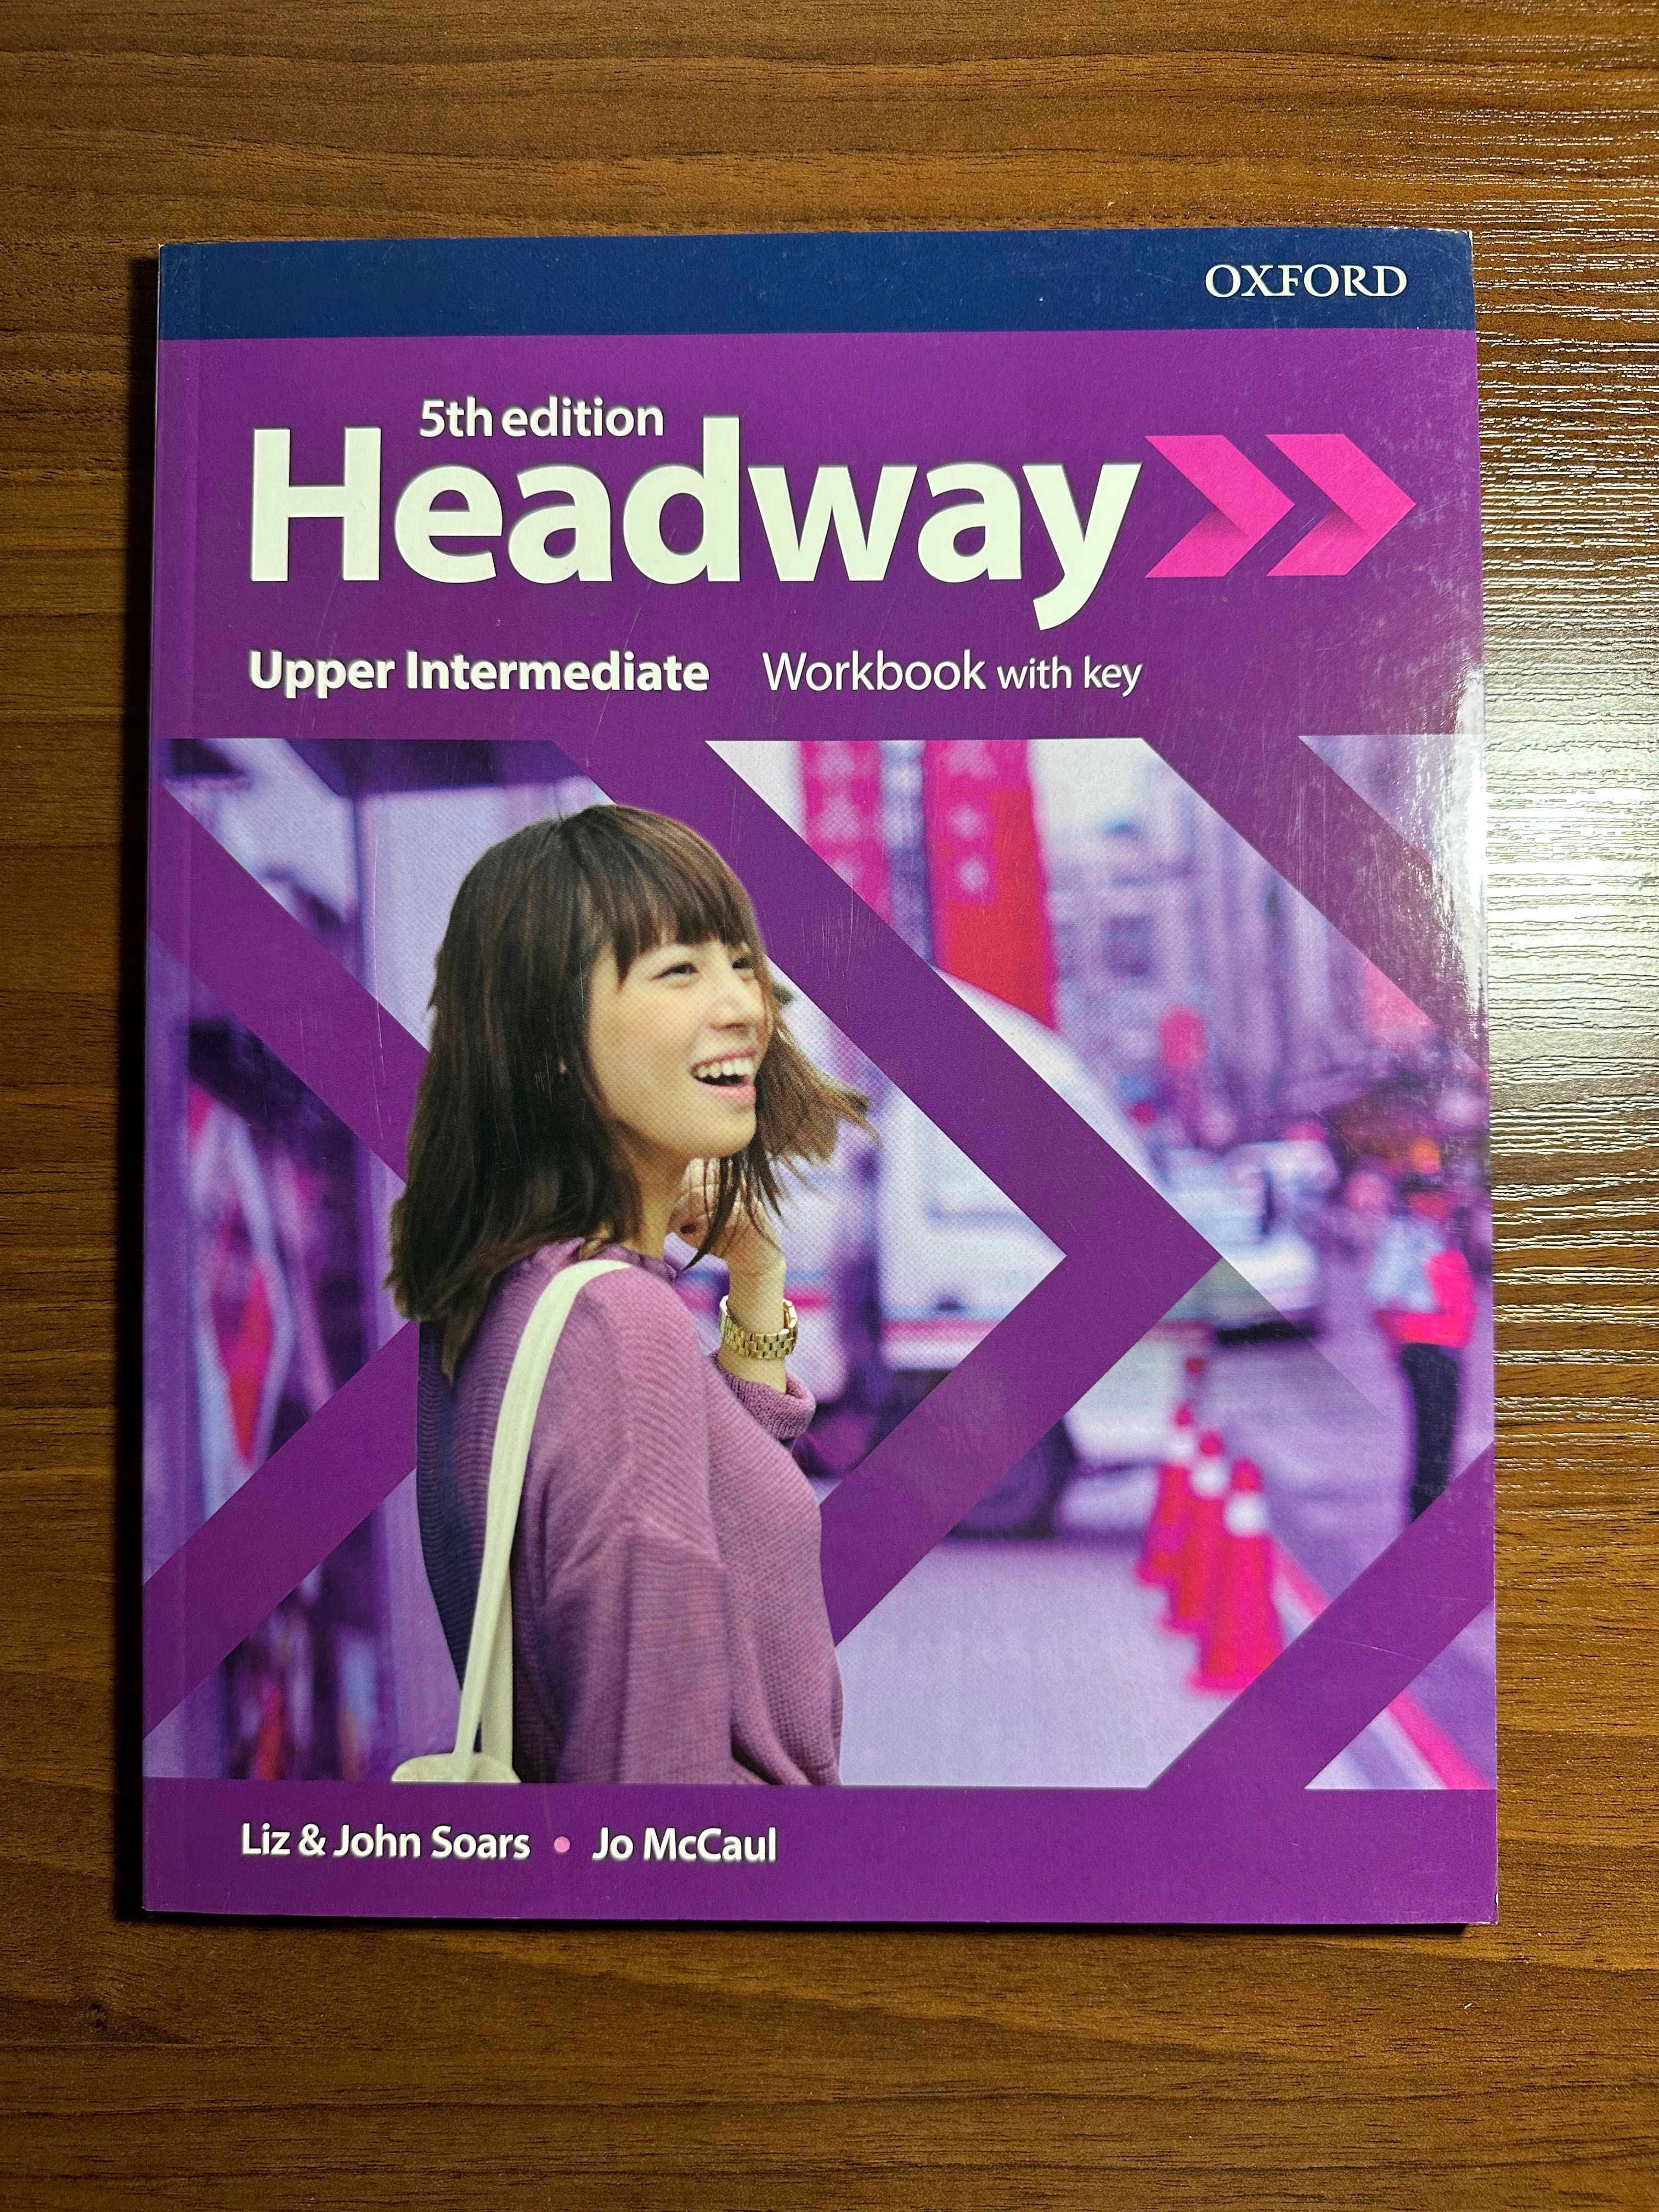 Headway 5th edition. Original Edition